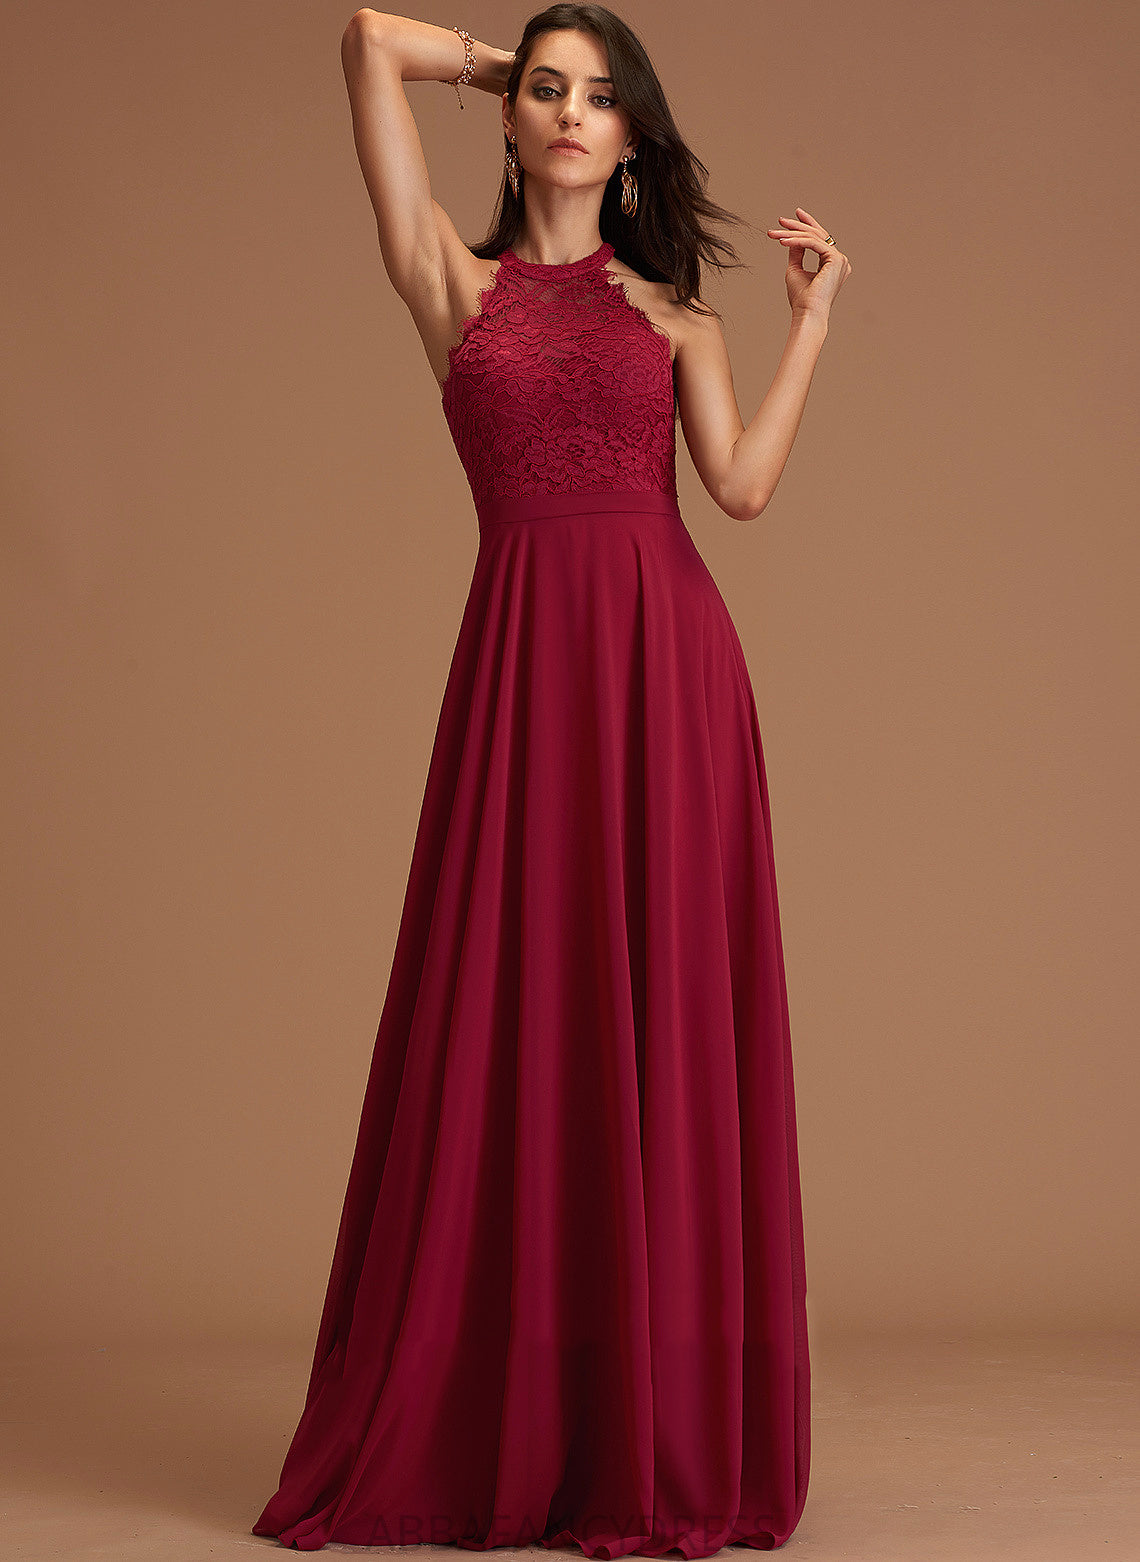 Lace Alondra Scoop A-Line Floor-Length Prom Dresses Chiffon